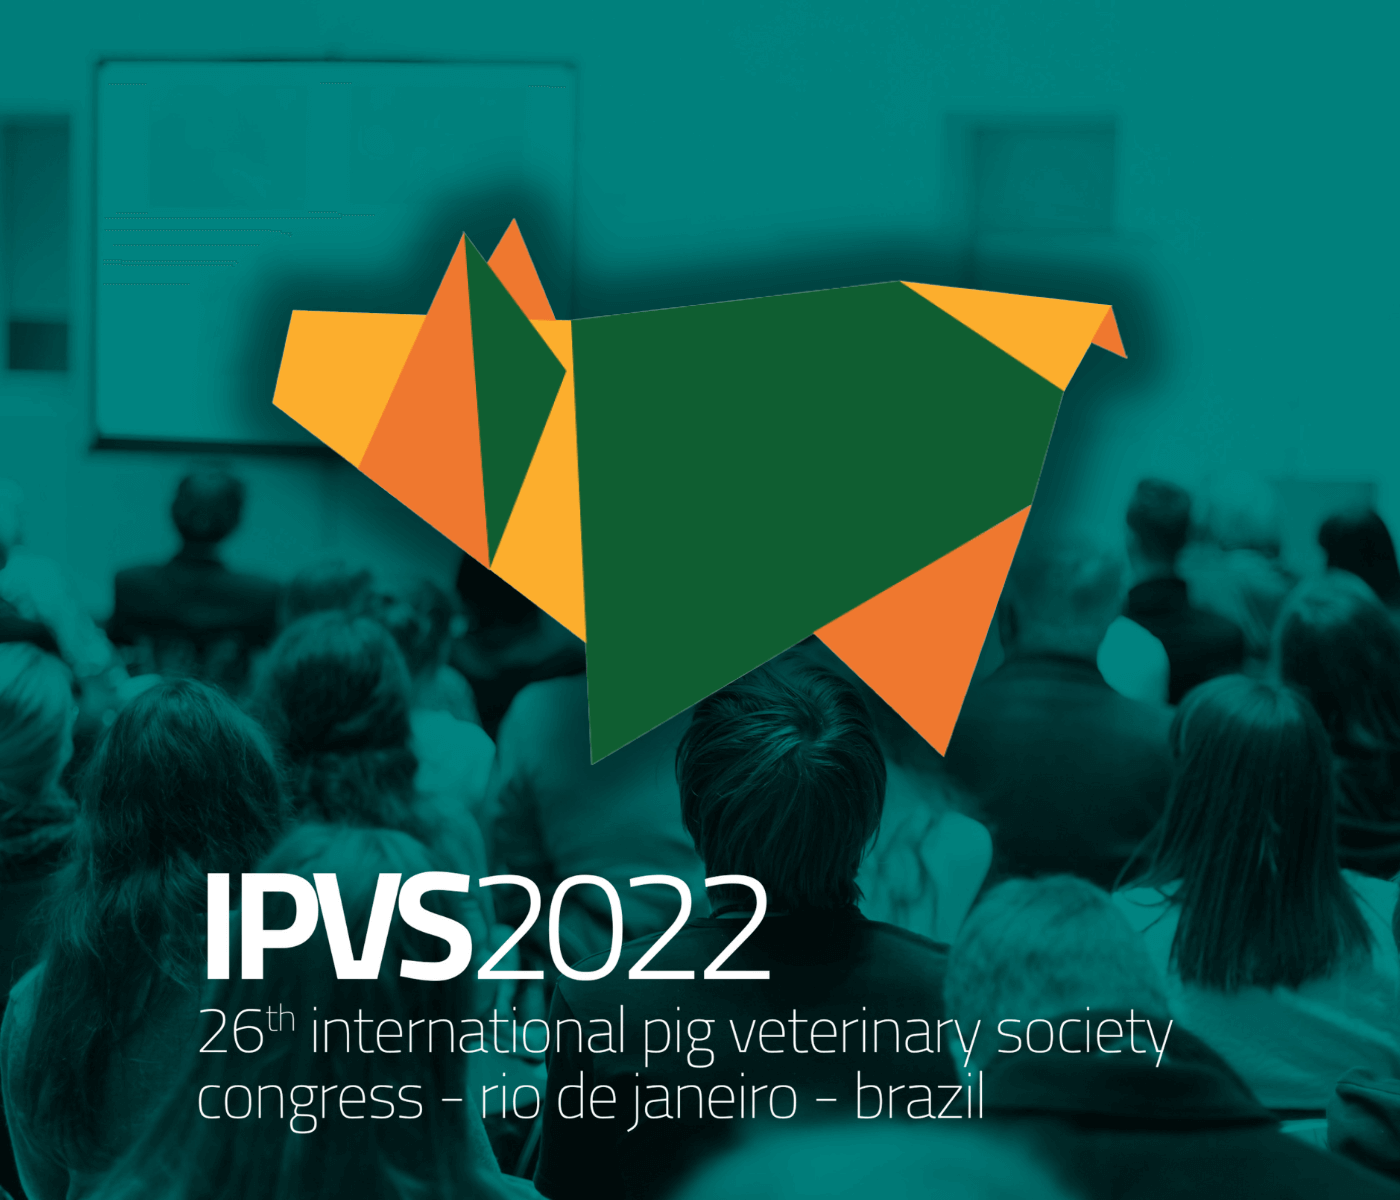 IPVS2022 abordará tripé fundamental para melhorar a rentabilidade na suinocultura...